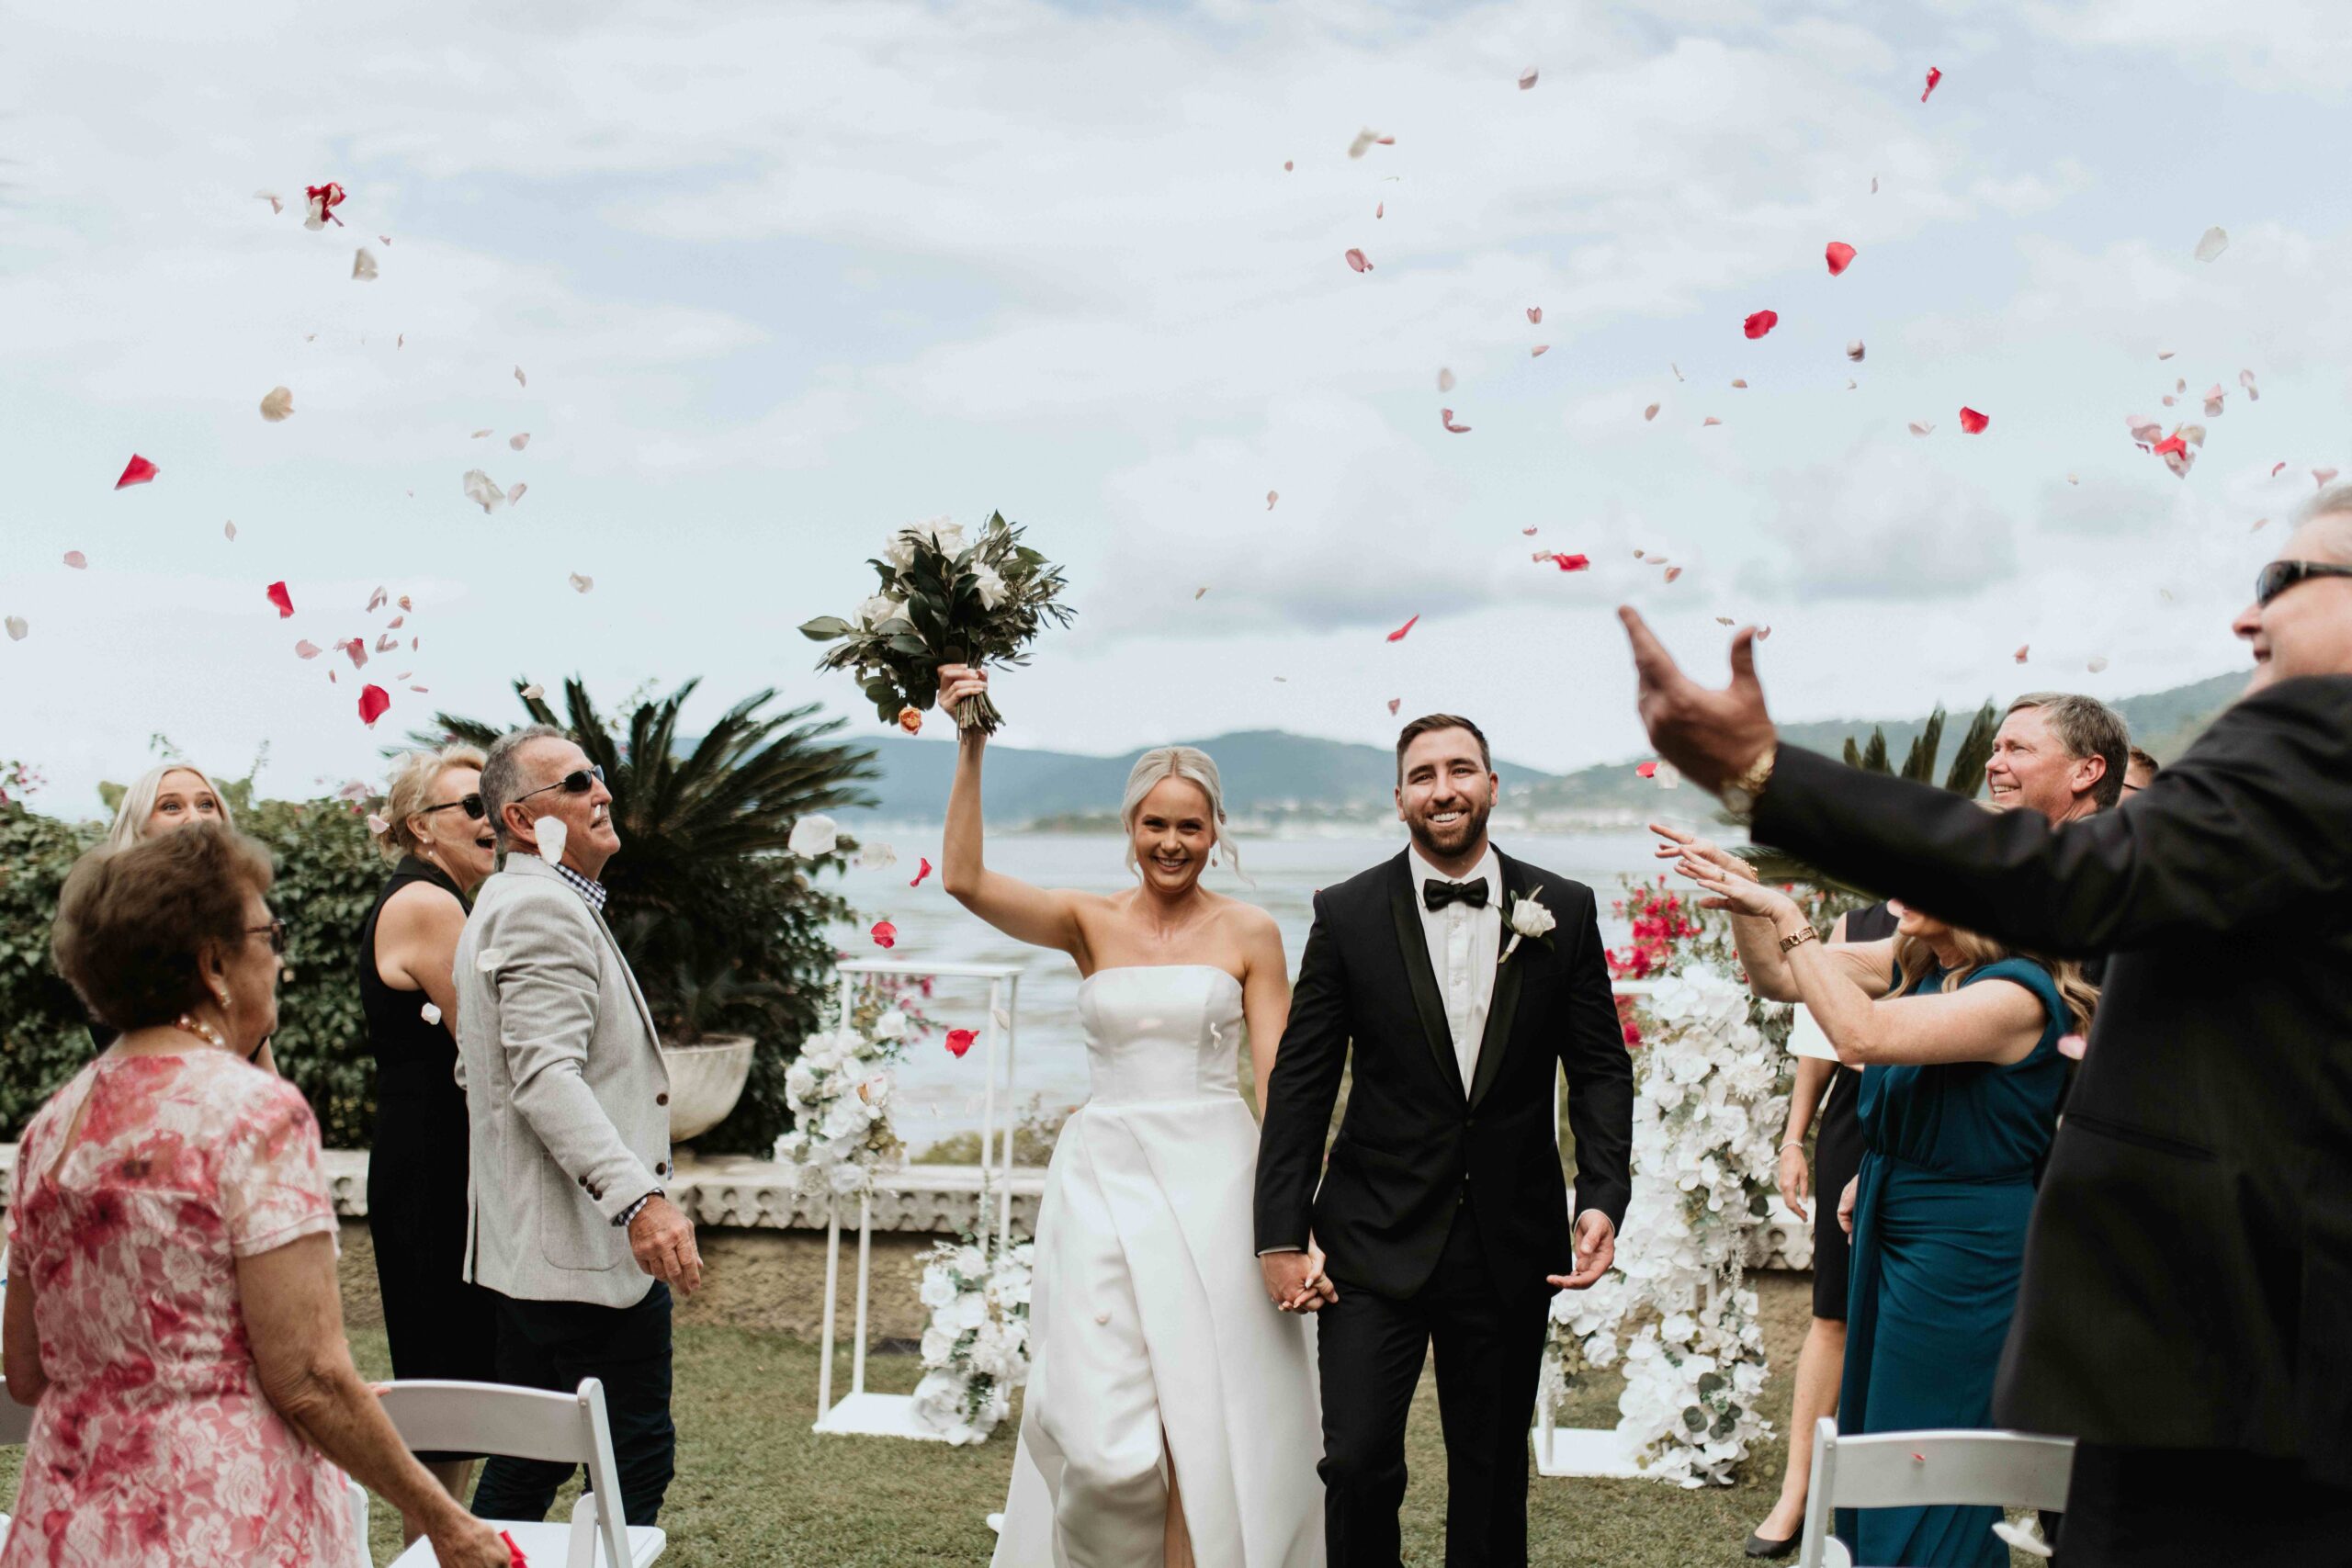 Real-wedding-Teagan-and-Luke-Villa-Botanica-Whitsundays-Australia-by-Rolling-Portraits-newlywed-portrait-post-ceremony-walking-down-the-aisle-with-flower-petals-raining-down